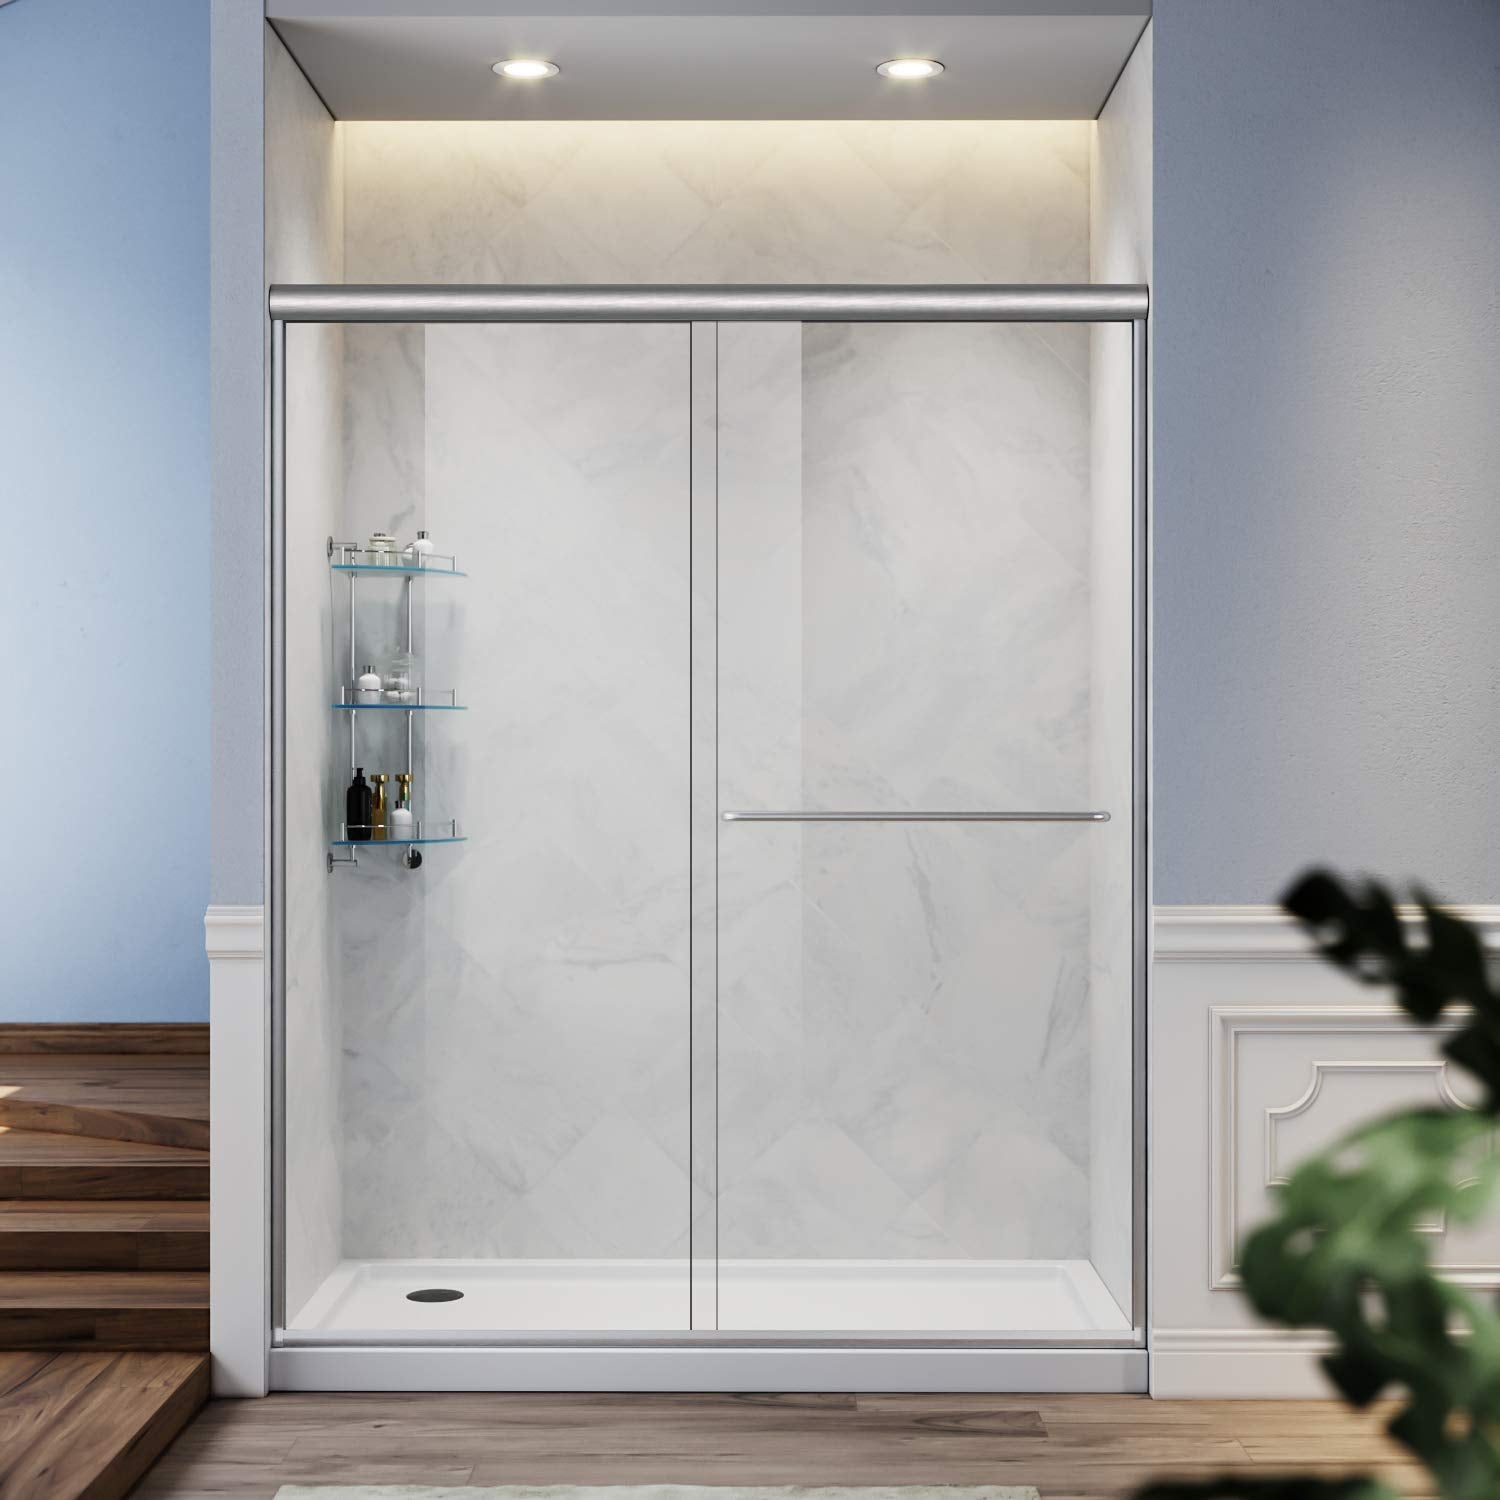 Sunny Shower Glass Sliding Shower Door 48 W x 72 H Semi-Frameless Bypass Shower Enclosure 1/4 Clear Glass Shower Doors Brushed Nickel Finish B020